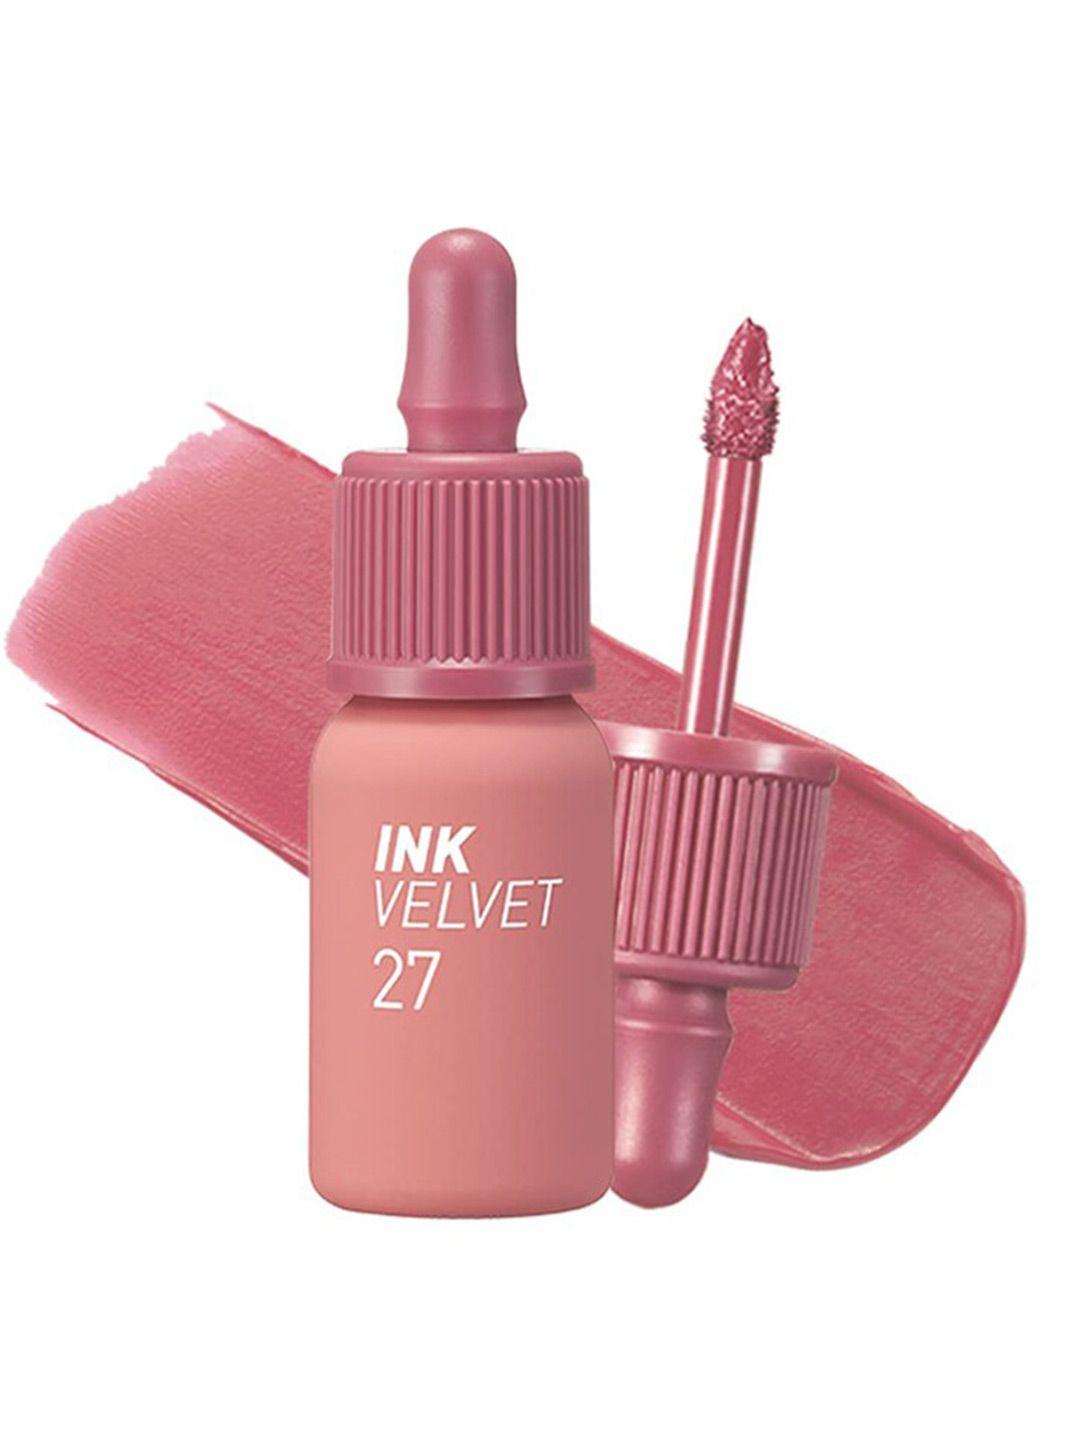 peripera ink velvet long-lasting liquid lipstick - strawberry nude 27